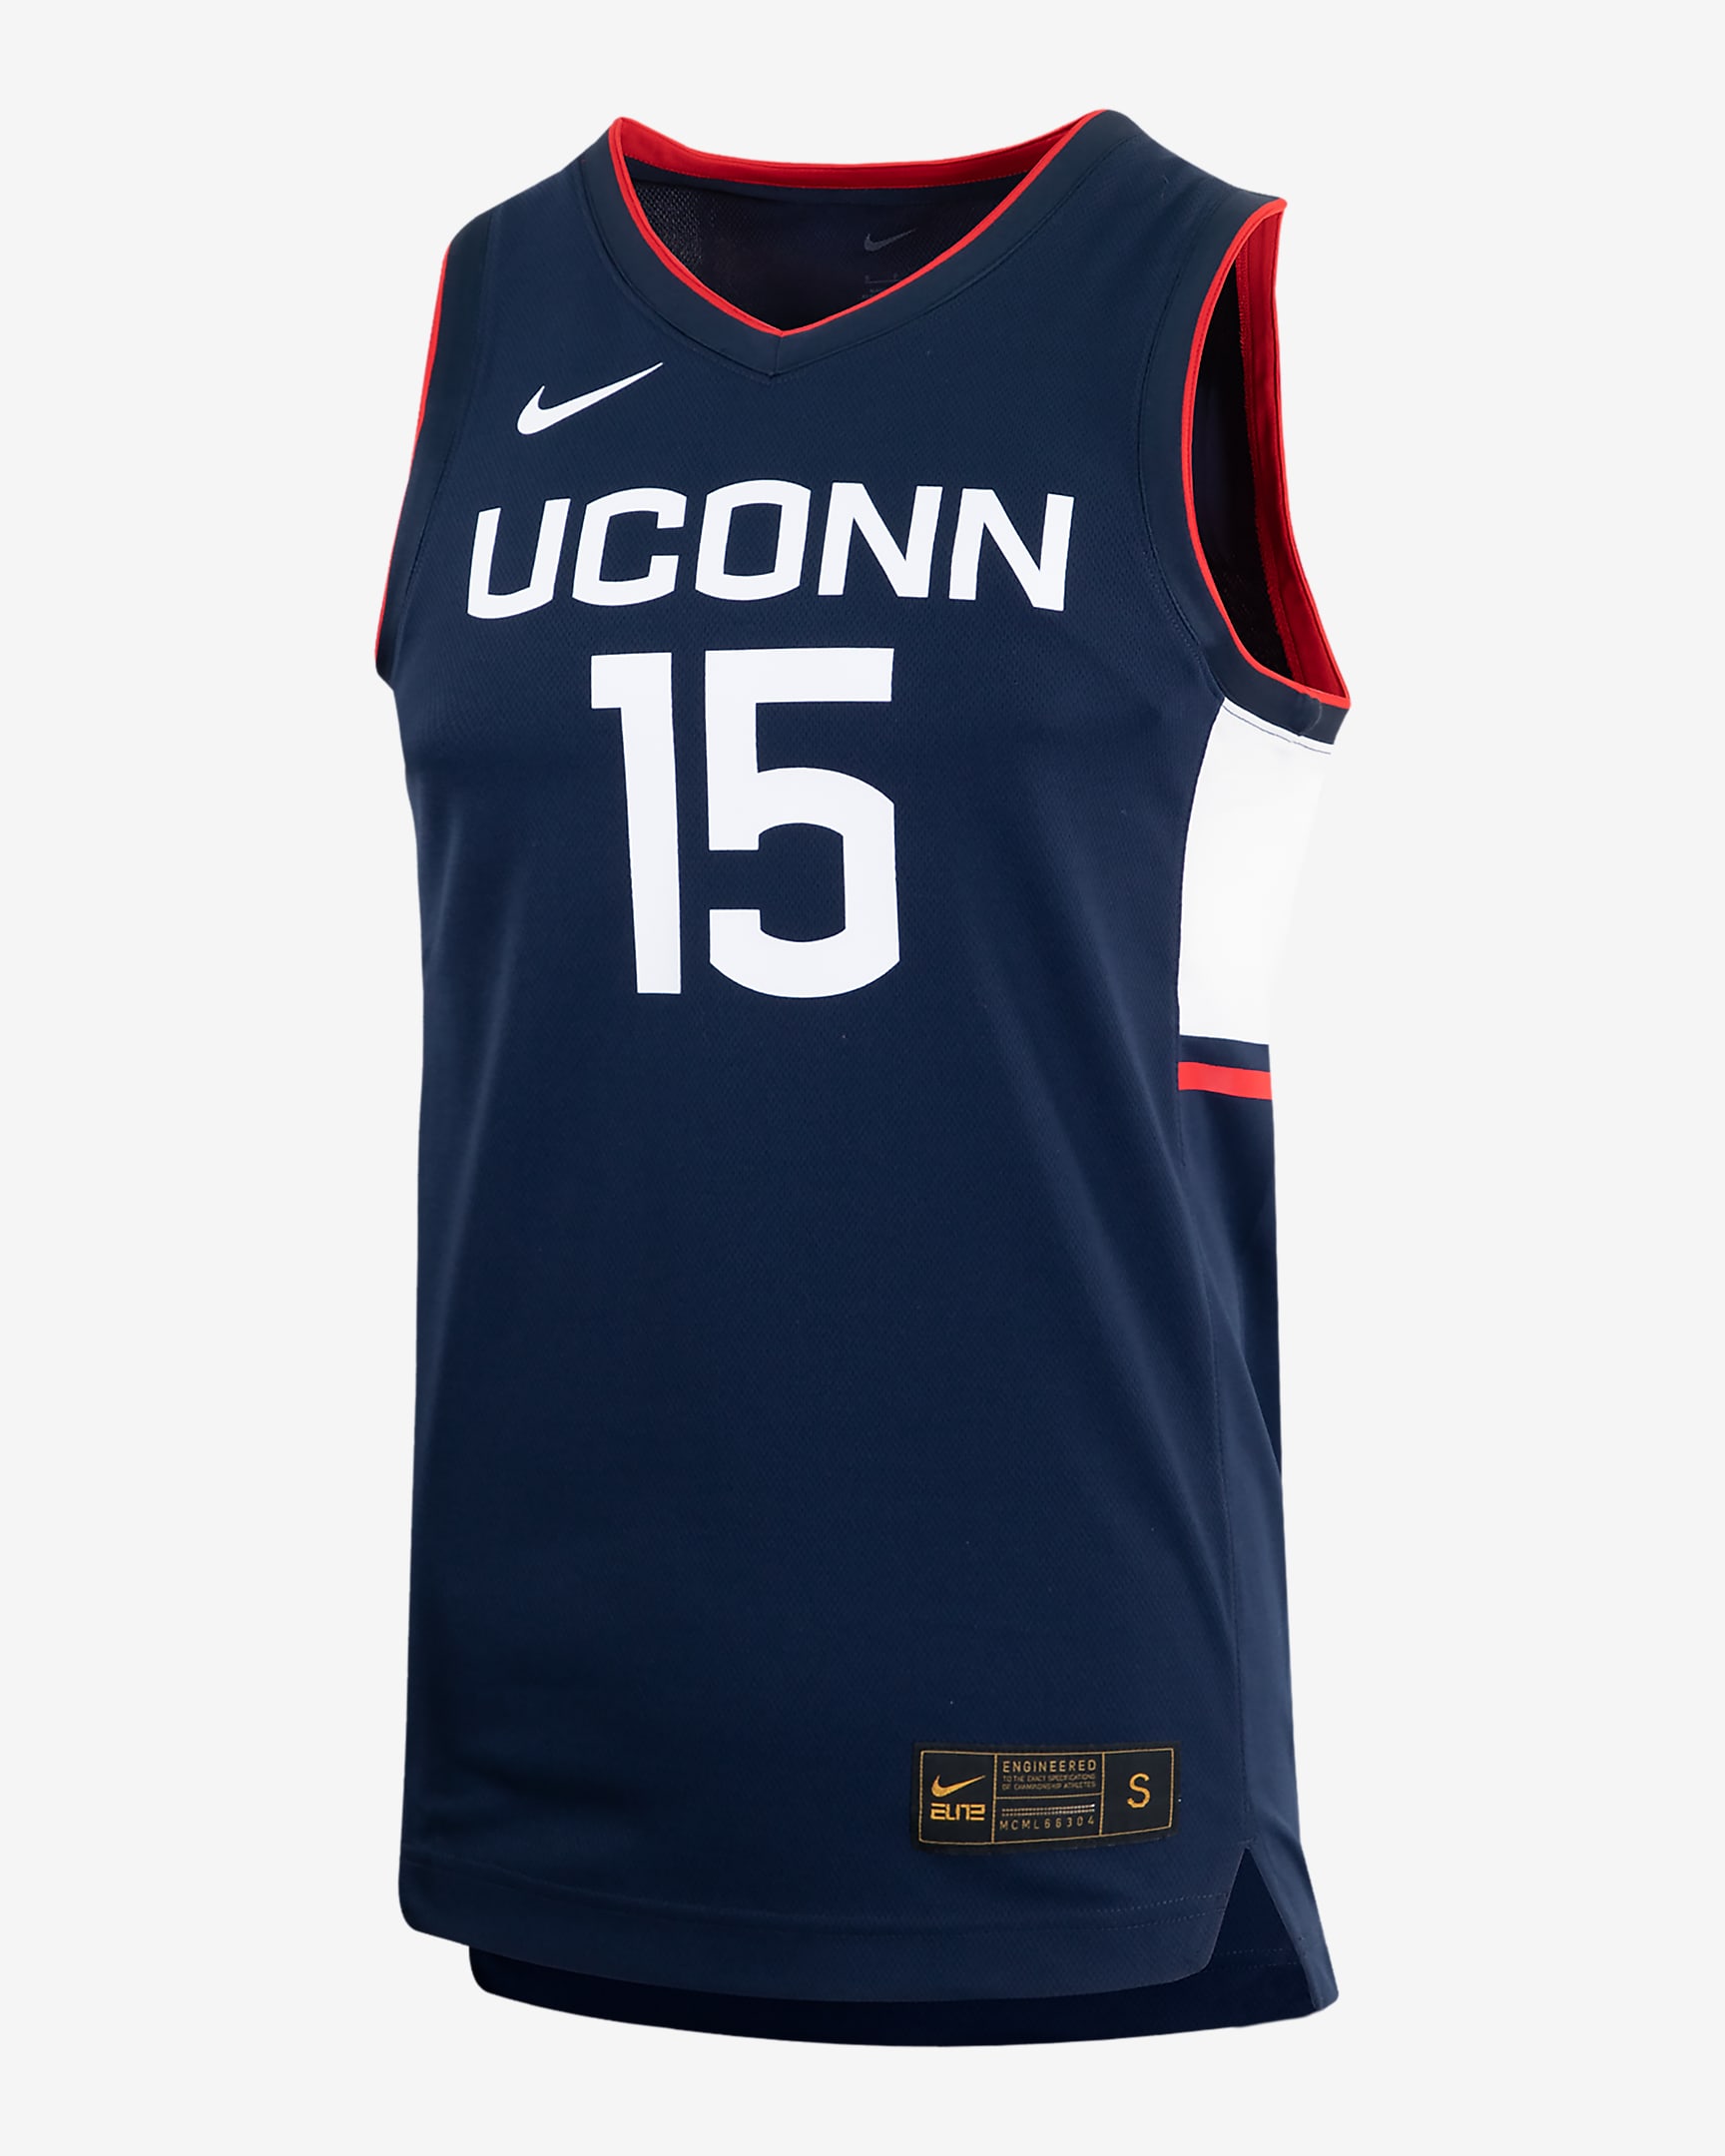 UConn Men's Nike College Basketball Jersey. Nike.com